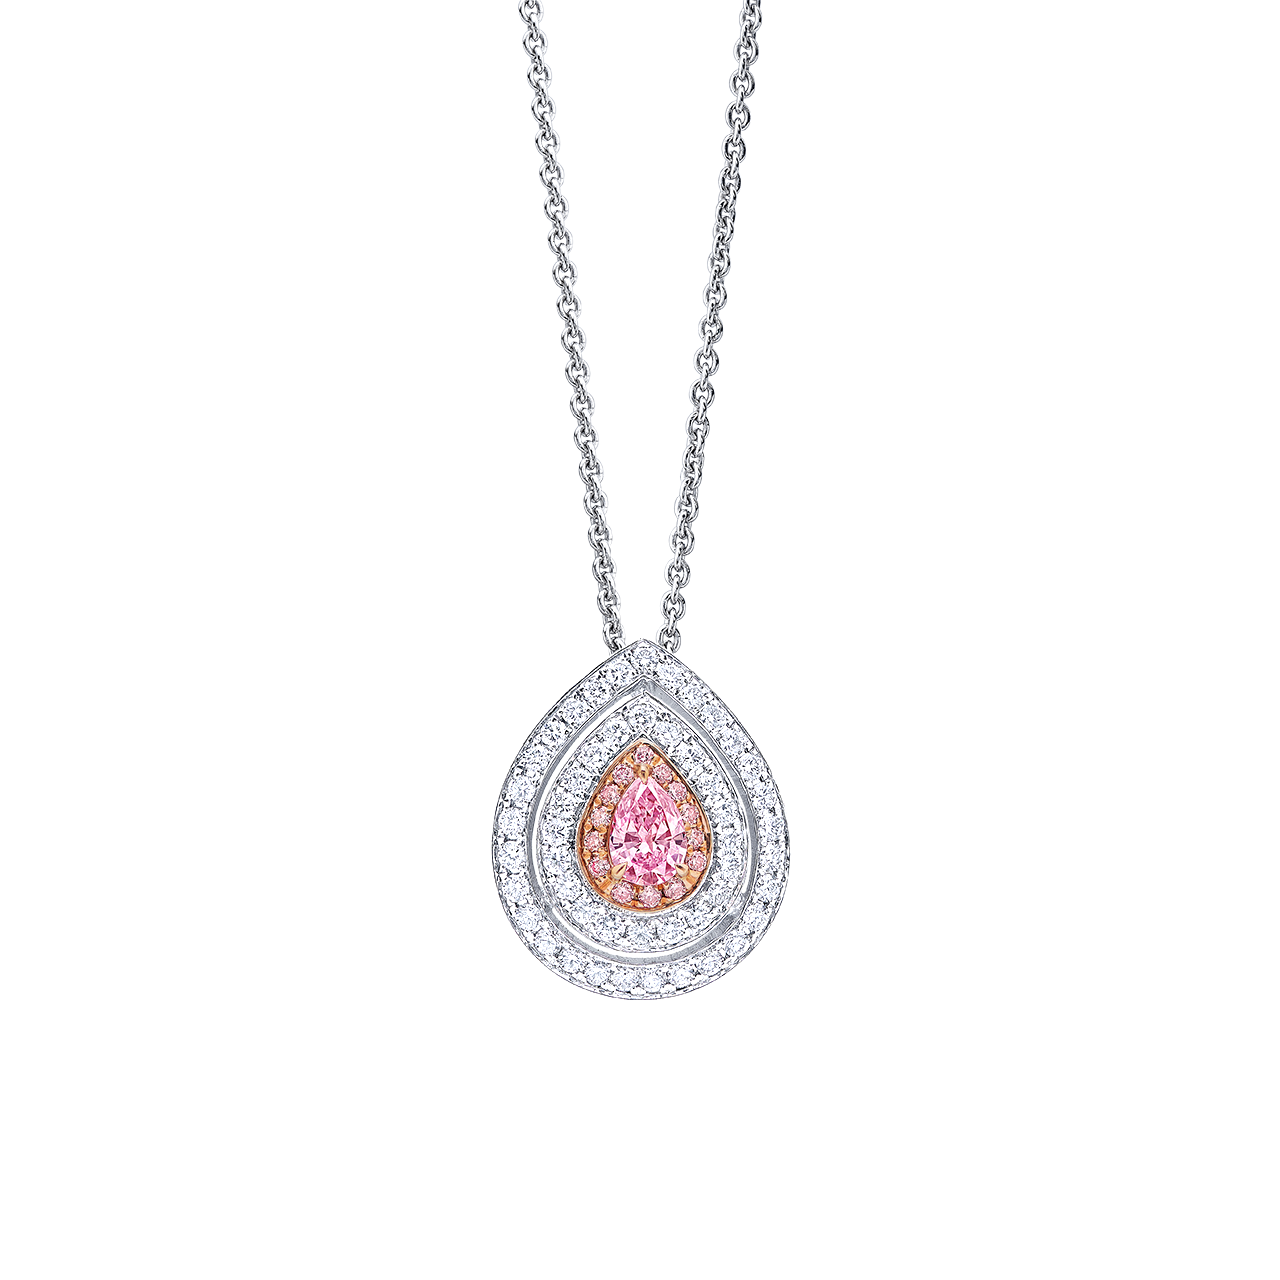 0.30克拉 阿蓋爾粉鑽墜鍊
Pink Diamond from Argyle Mine
and Diamond Pendant Necklace